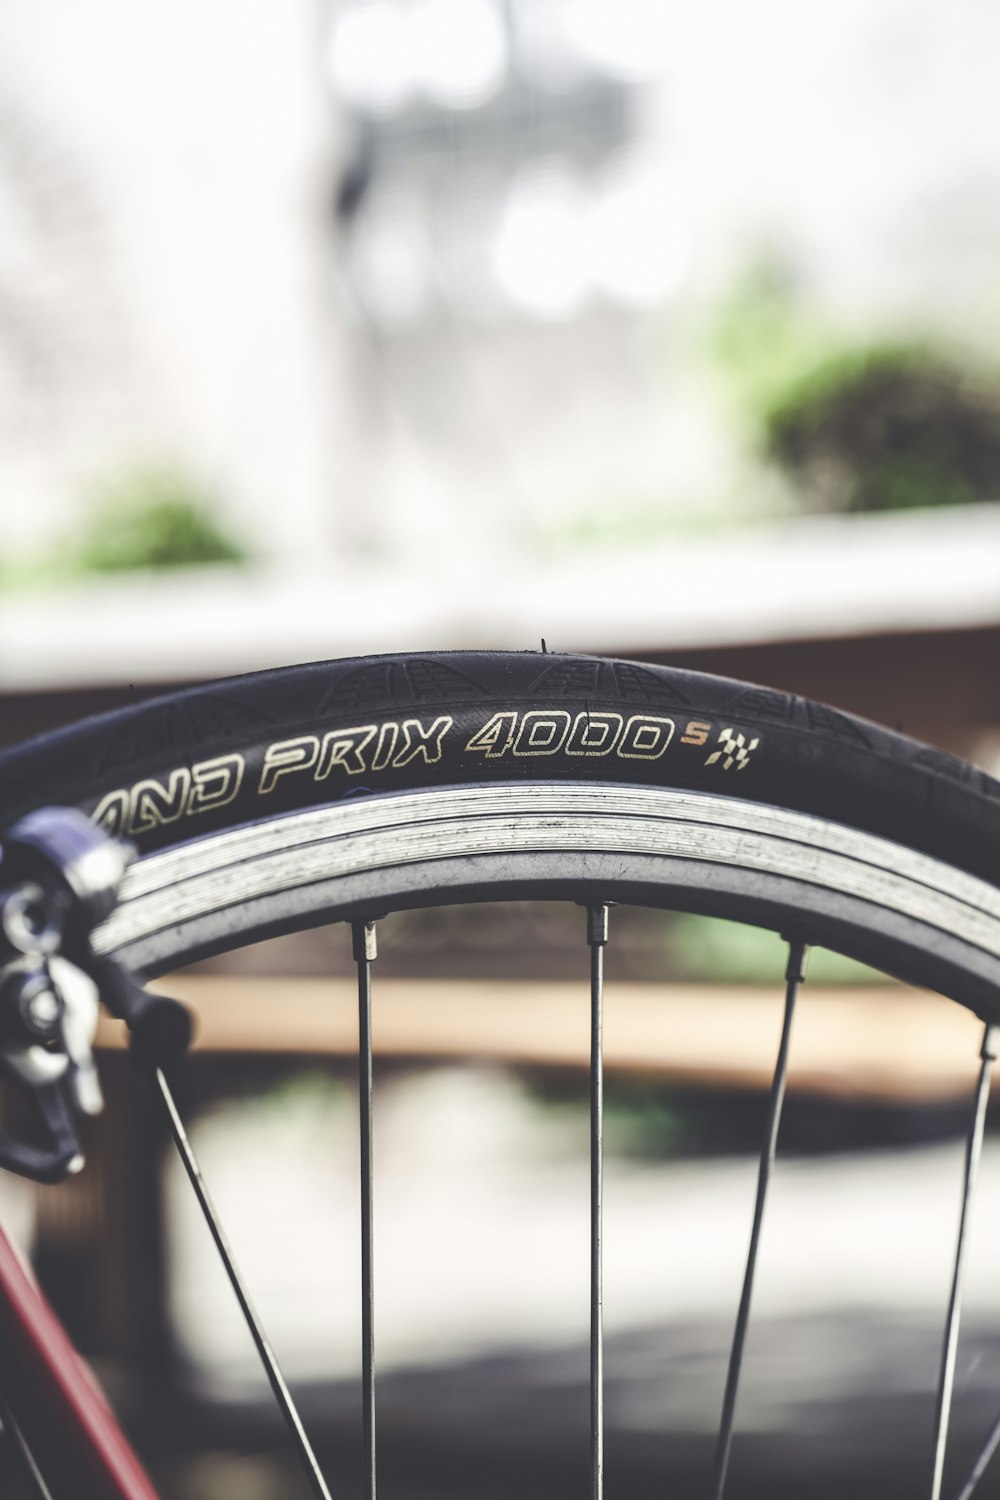 foto de foco raso da roda da bicicleta